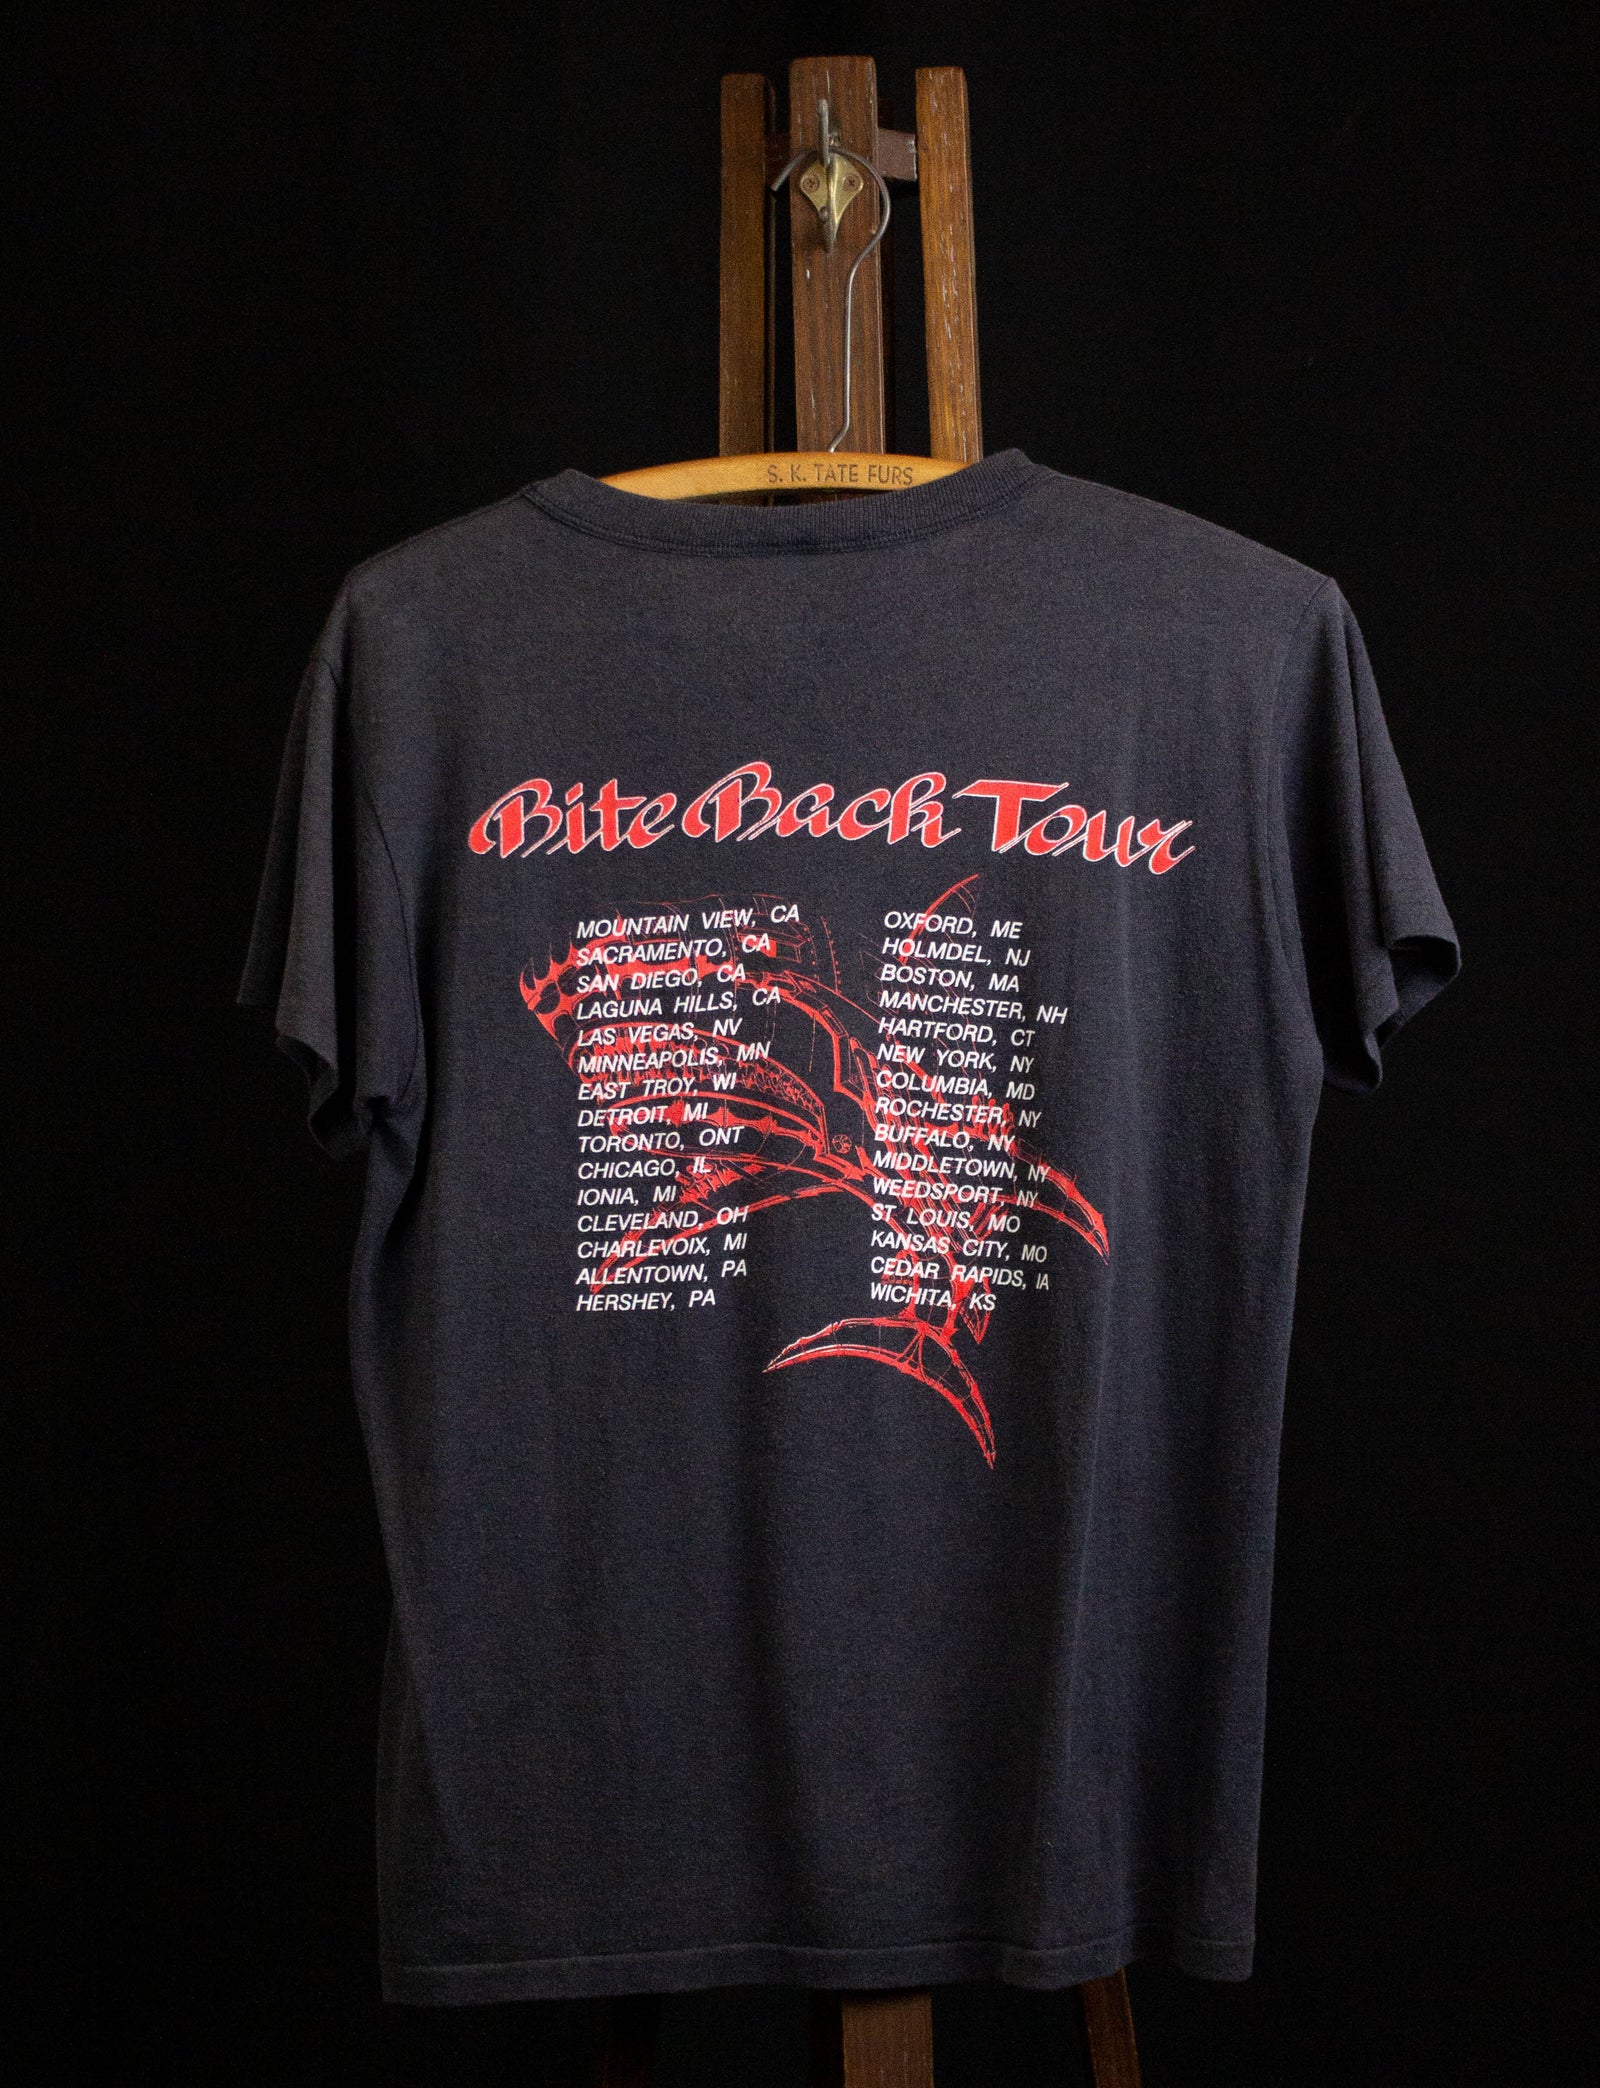 Vintage 1988 Great White Bite Back Tour Concert T Shirt Black Medium –  Black Shag Vintage